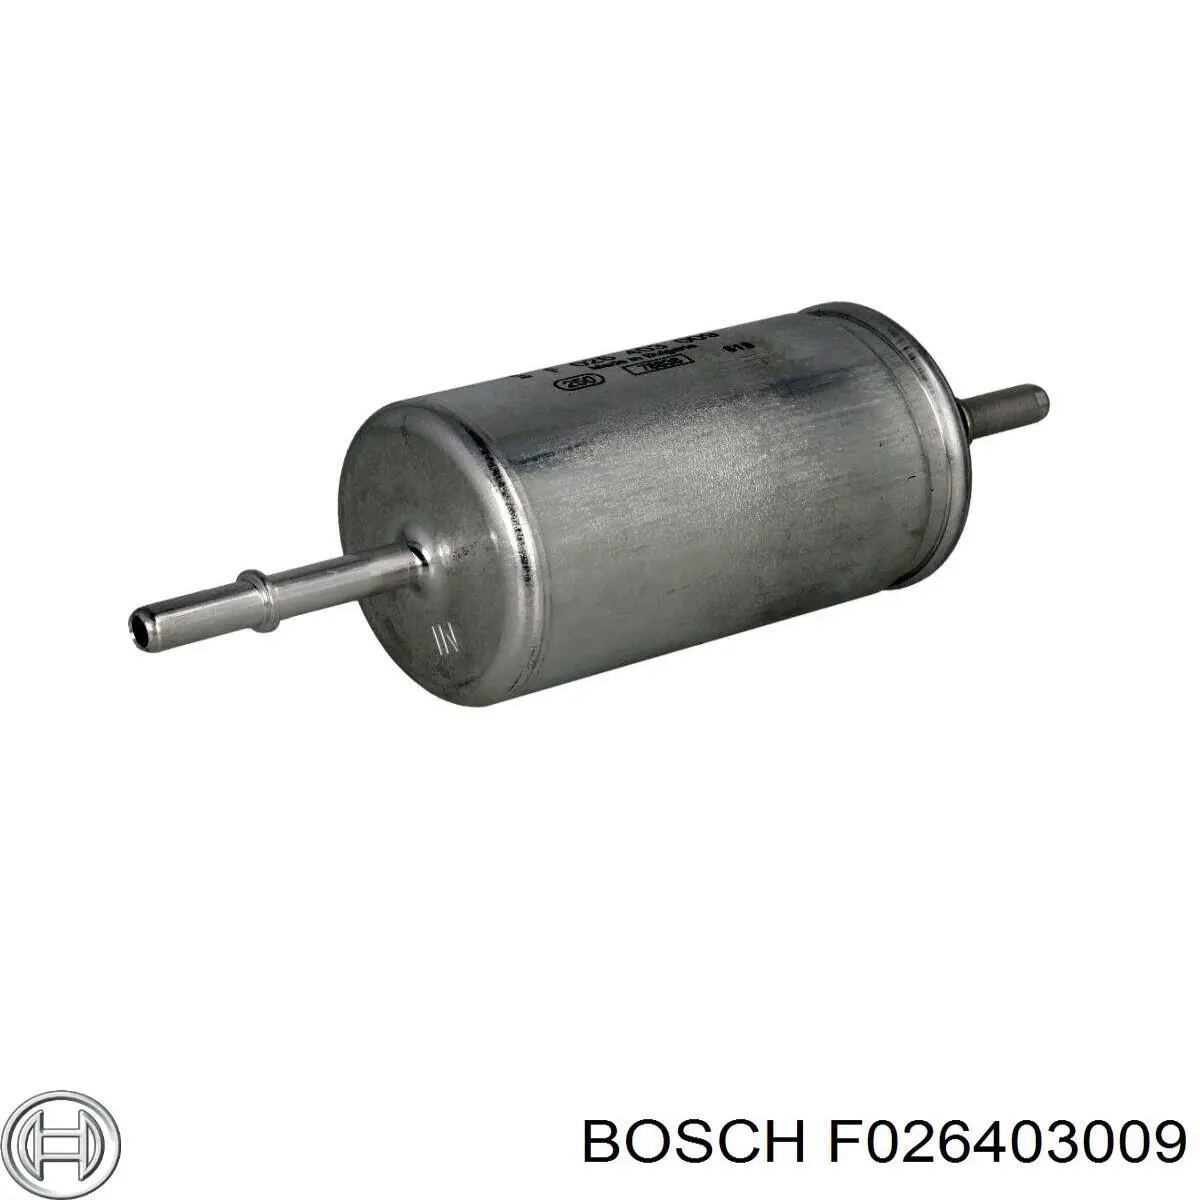 F026403009 Bosch filtro combustible